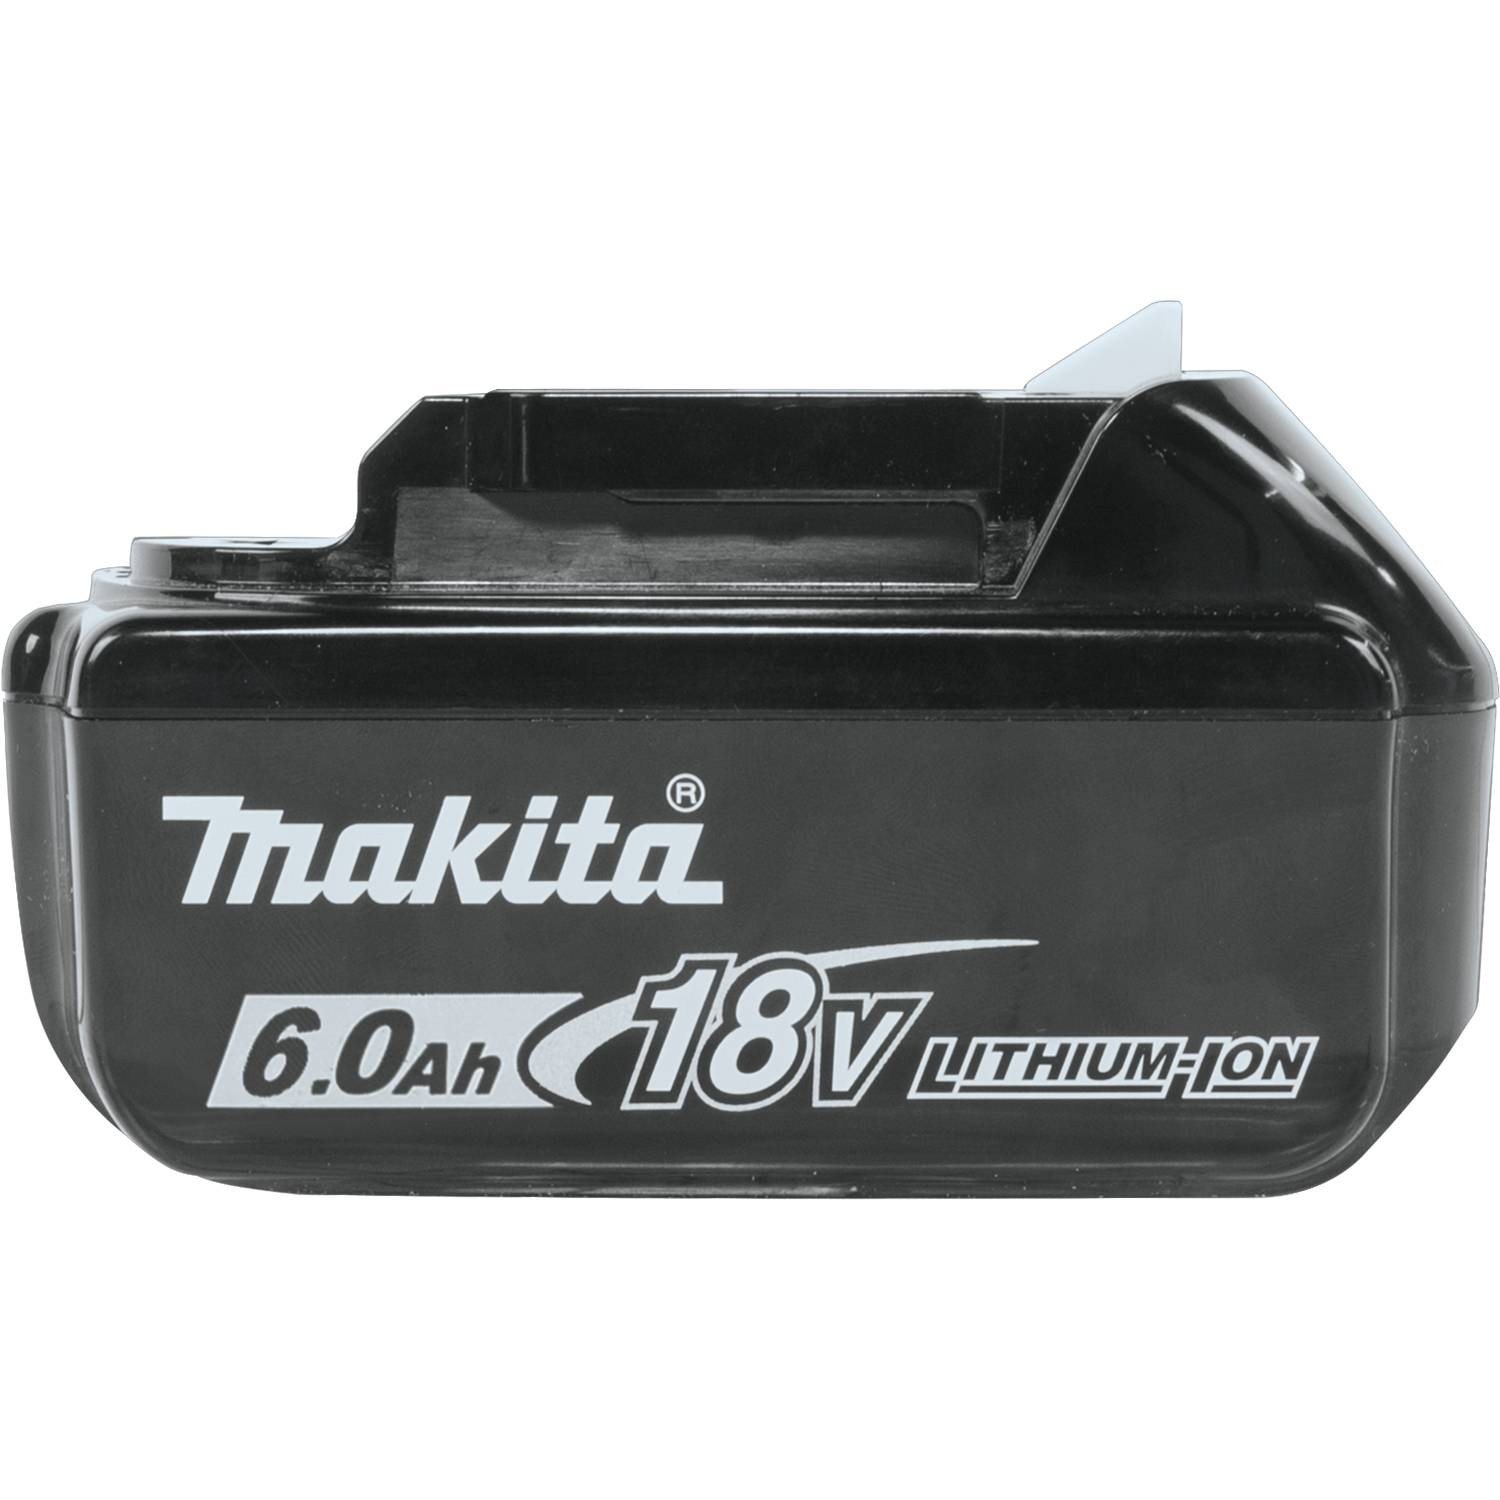 Makita BL1860B-2 18V LXT Lithium-Ion 6.0Ah Battery, 2/pk, Black